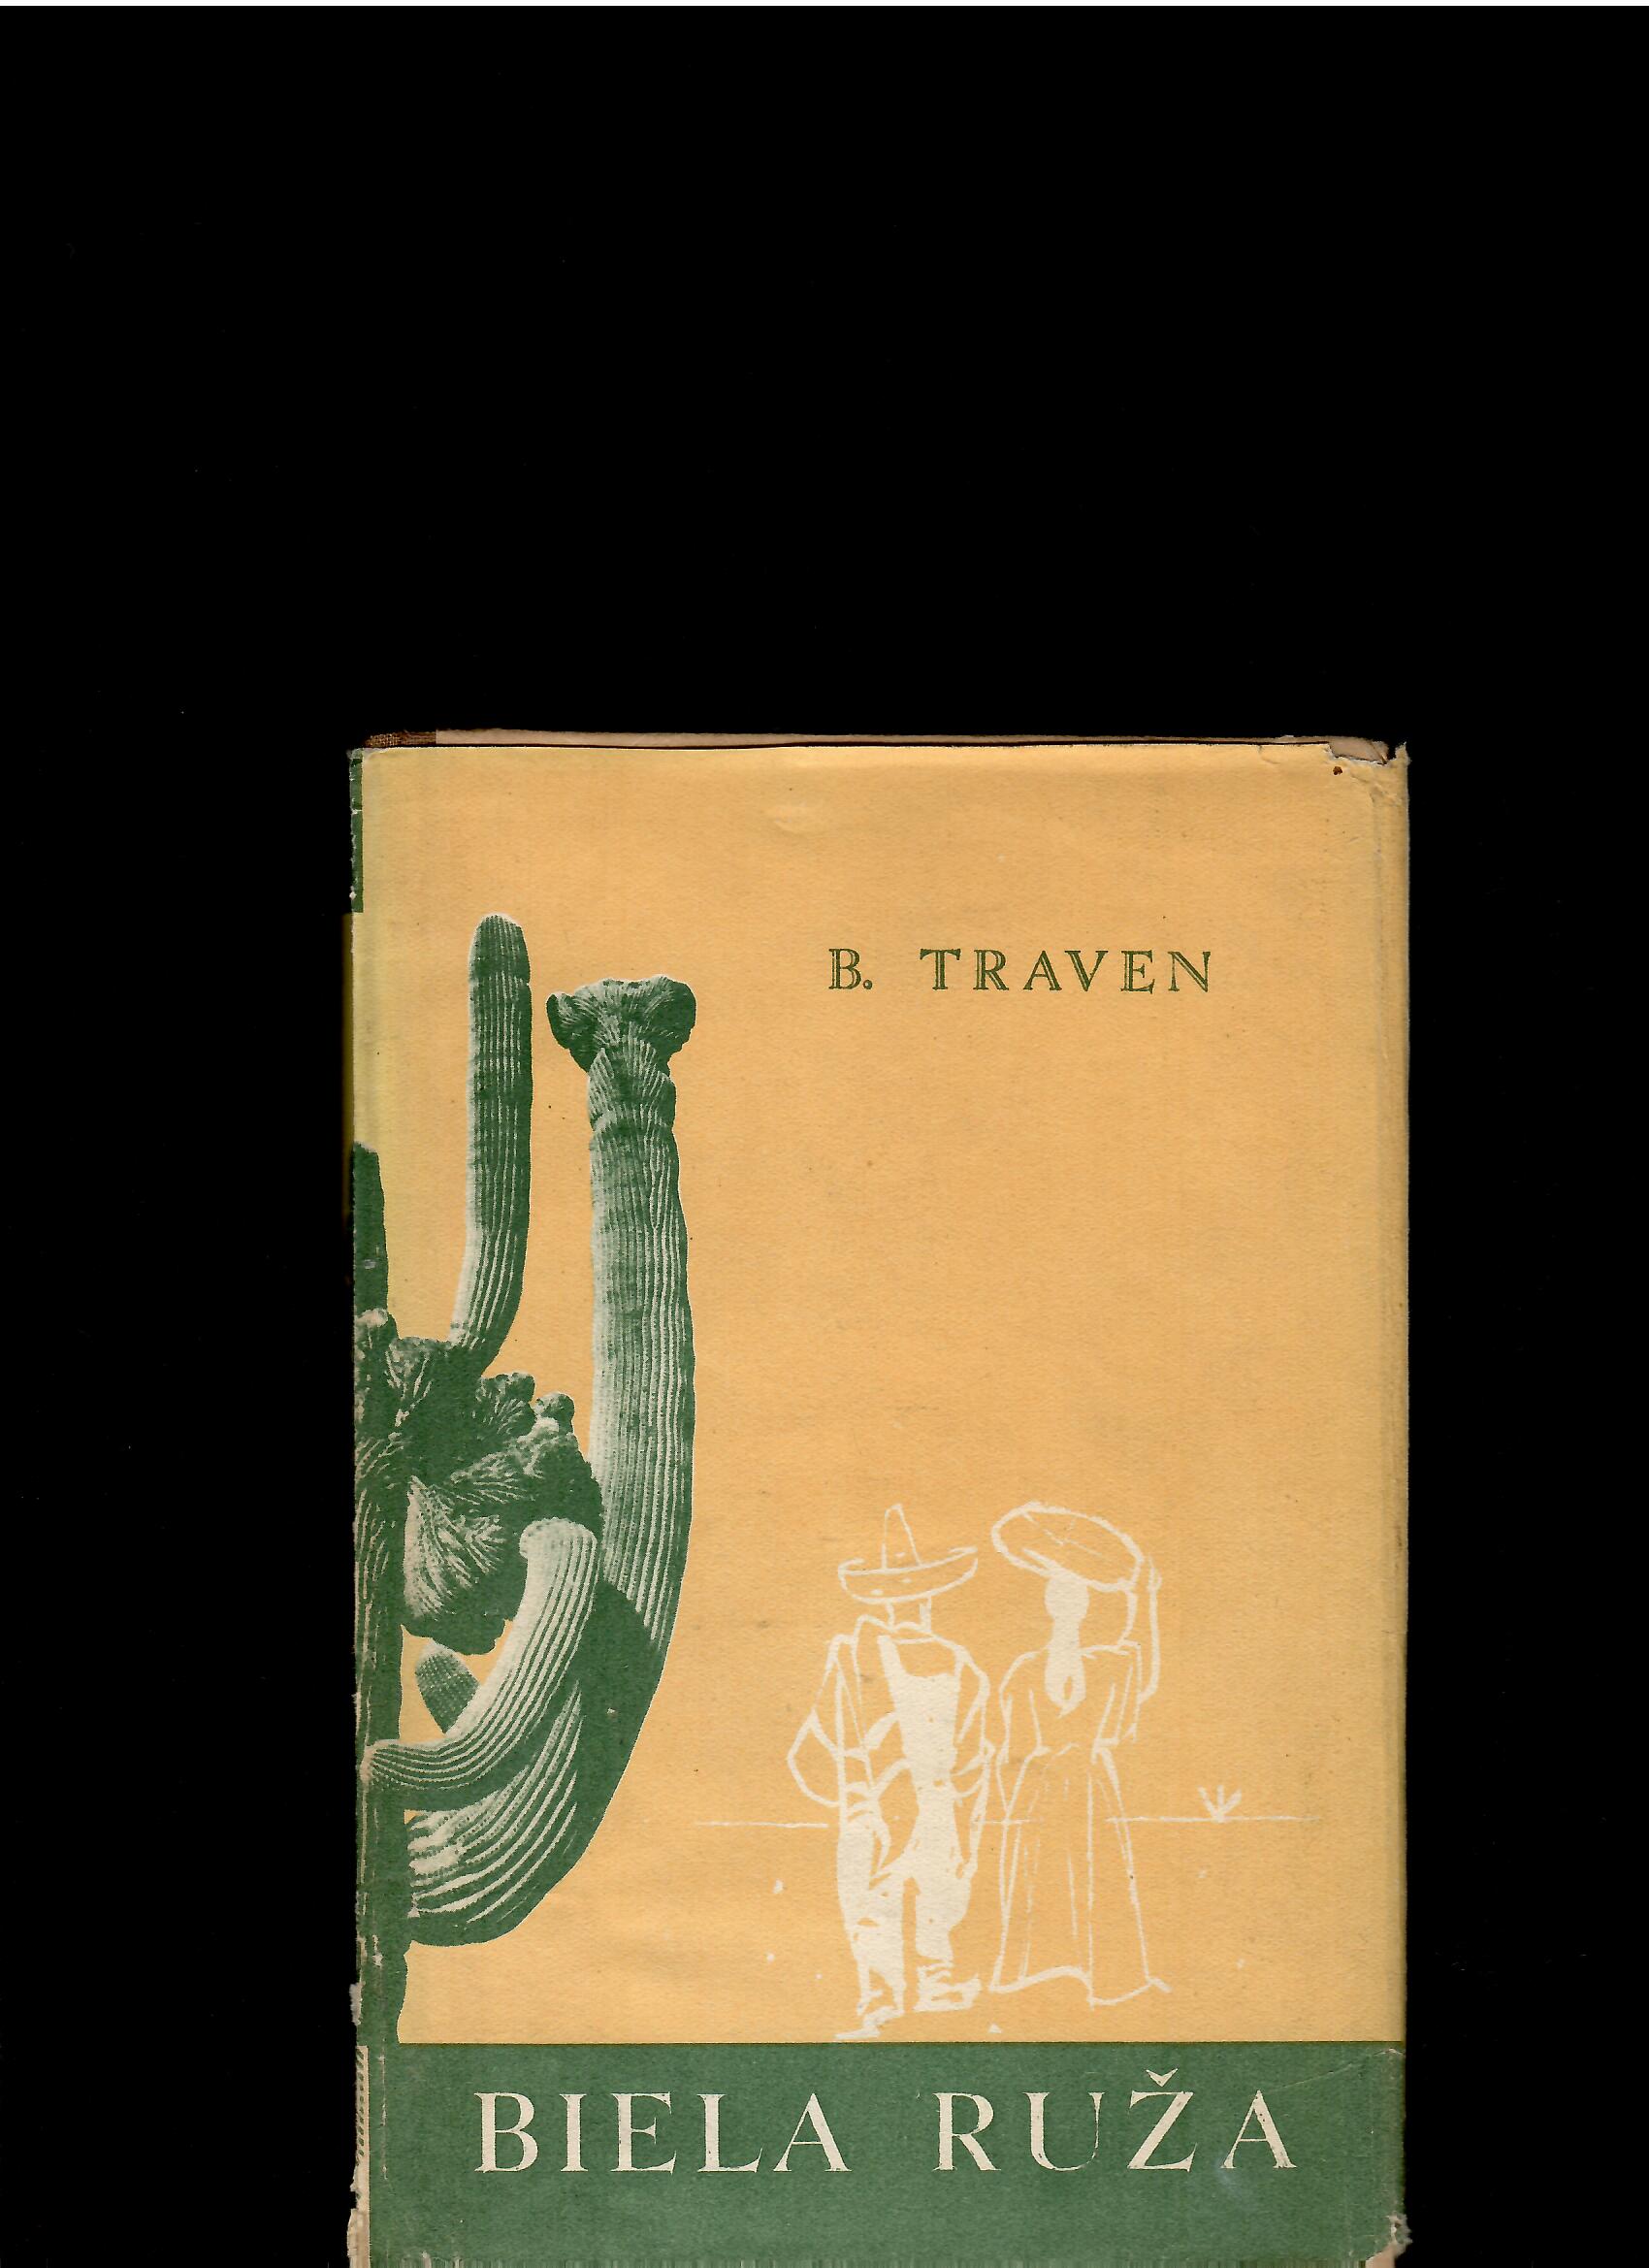 B. Traven: Biela ruža /1949, obálka Vincent Hložník/